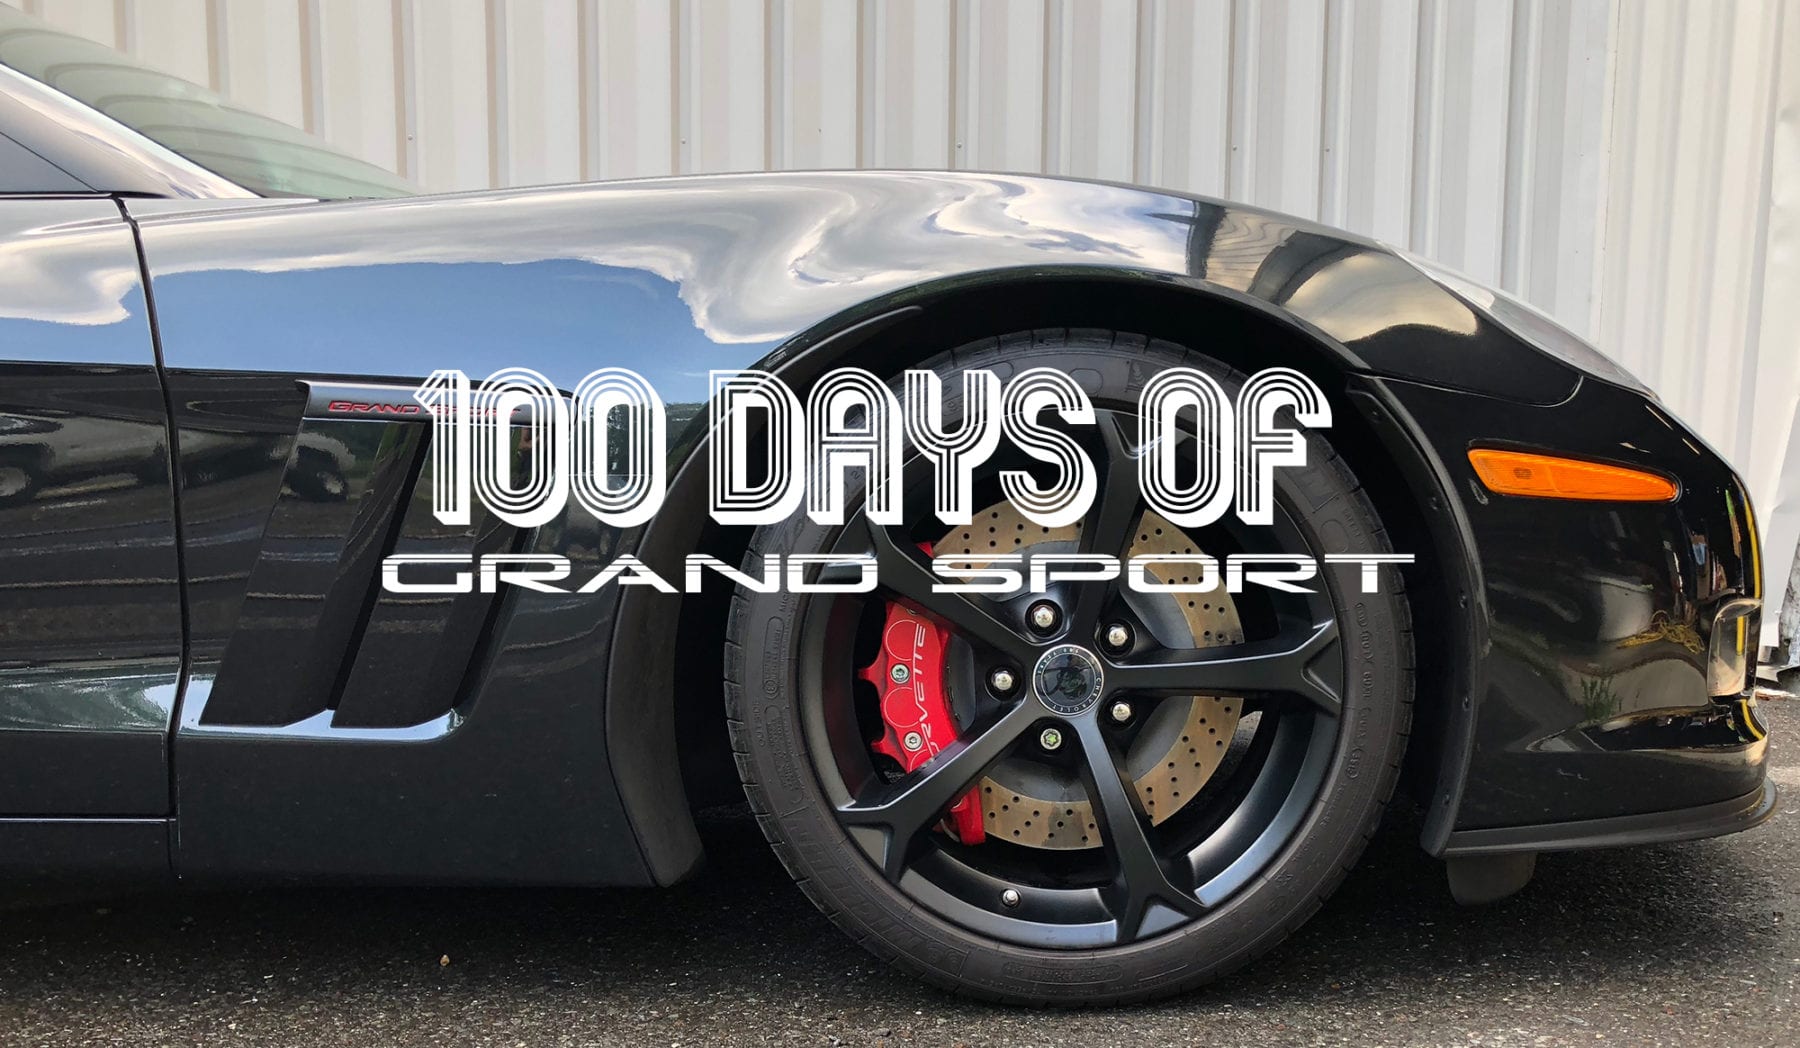 100-Days-of-Grand-Sport-pt3-lead